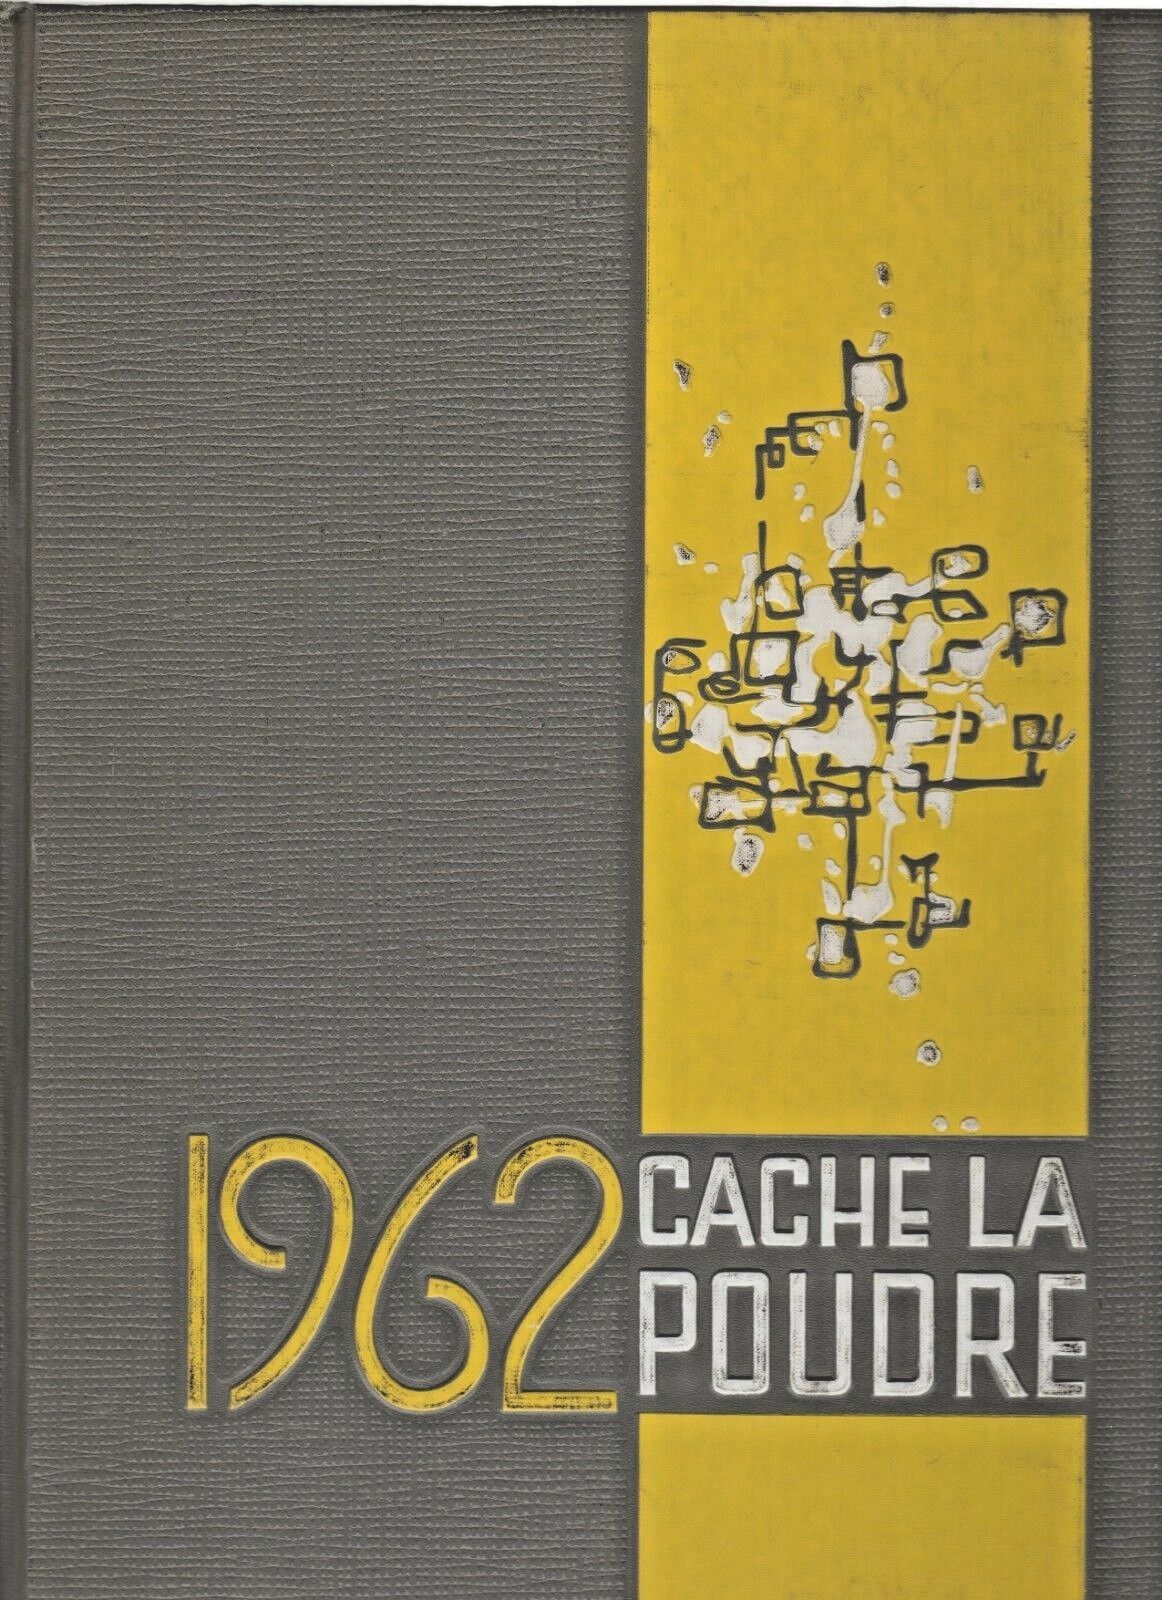 Original 1962 Cache La Poudre-Colorado State College Yearbook Greeley-The Bears